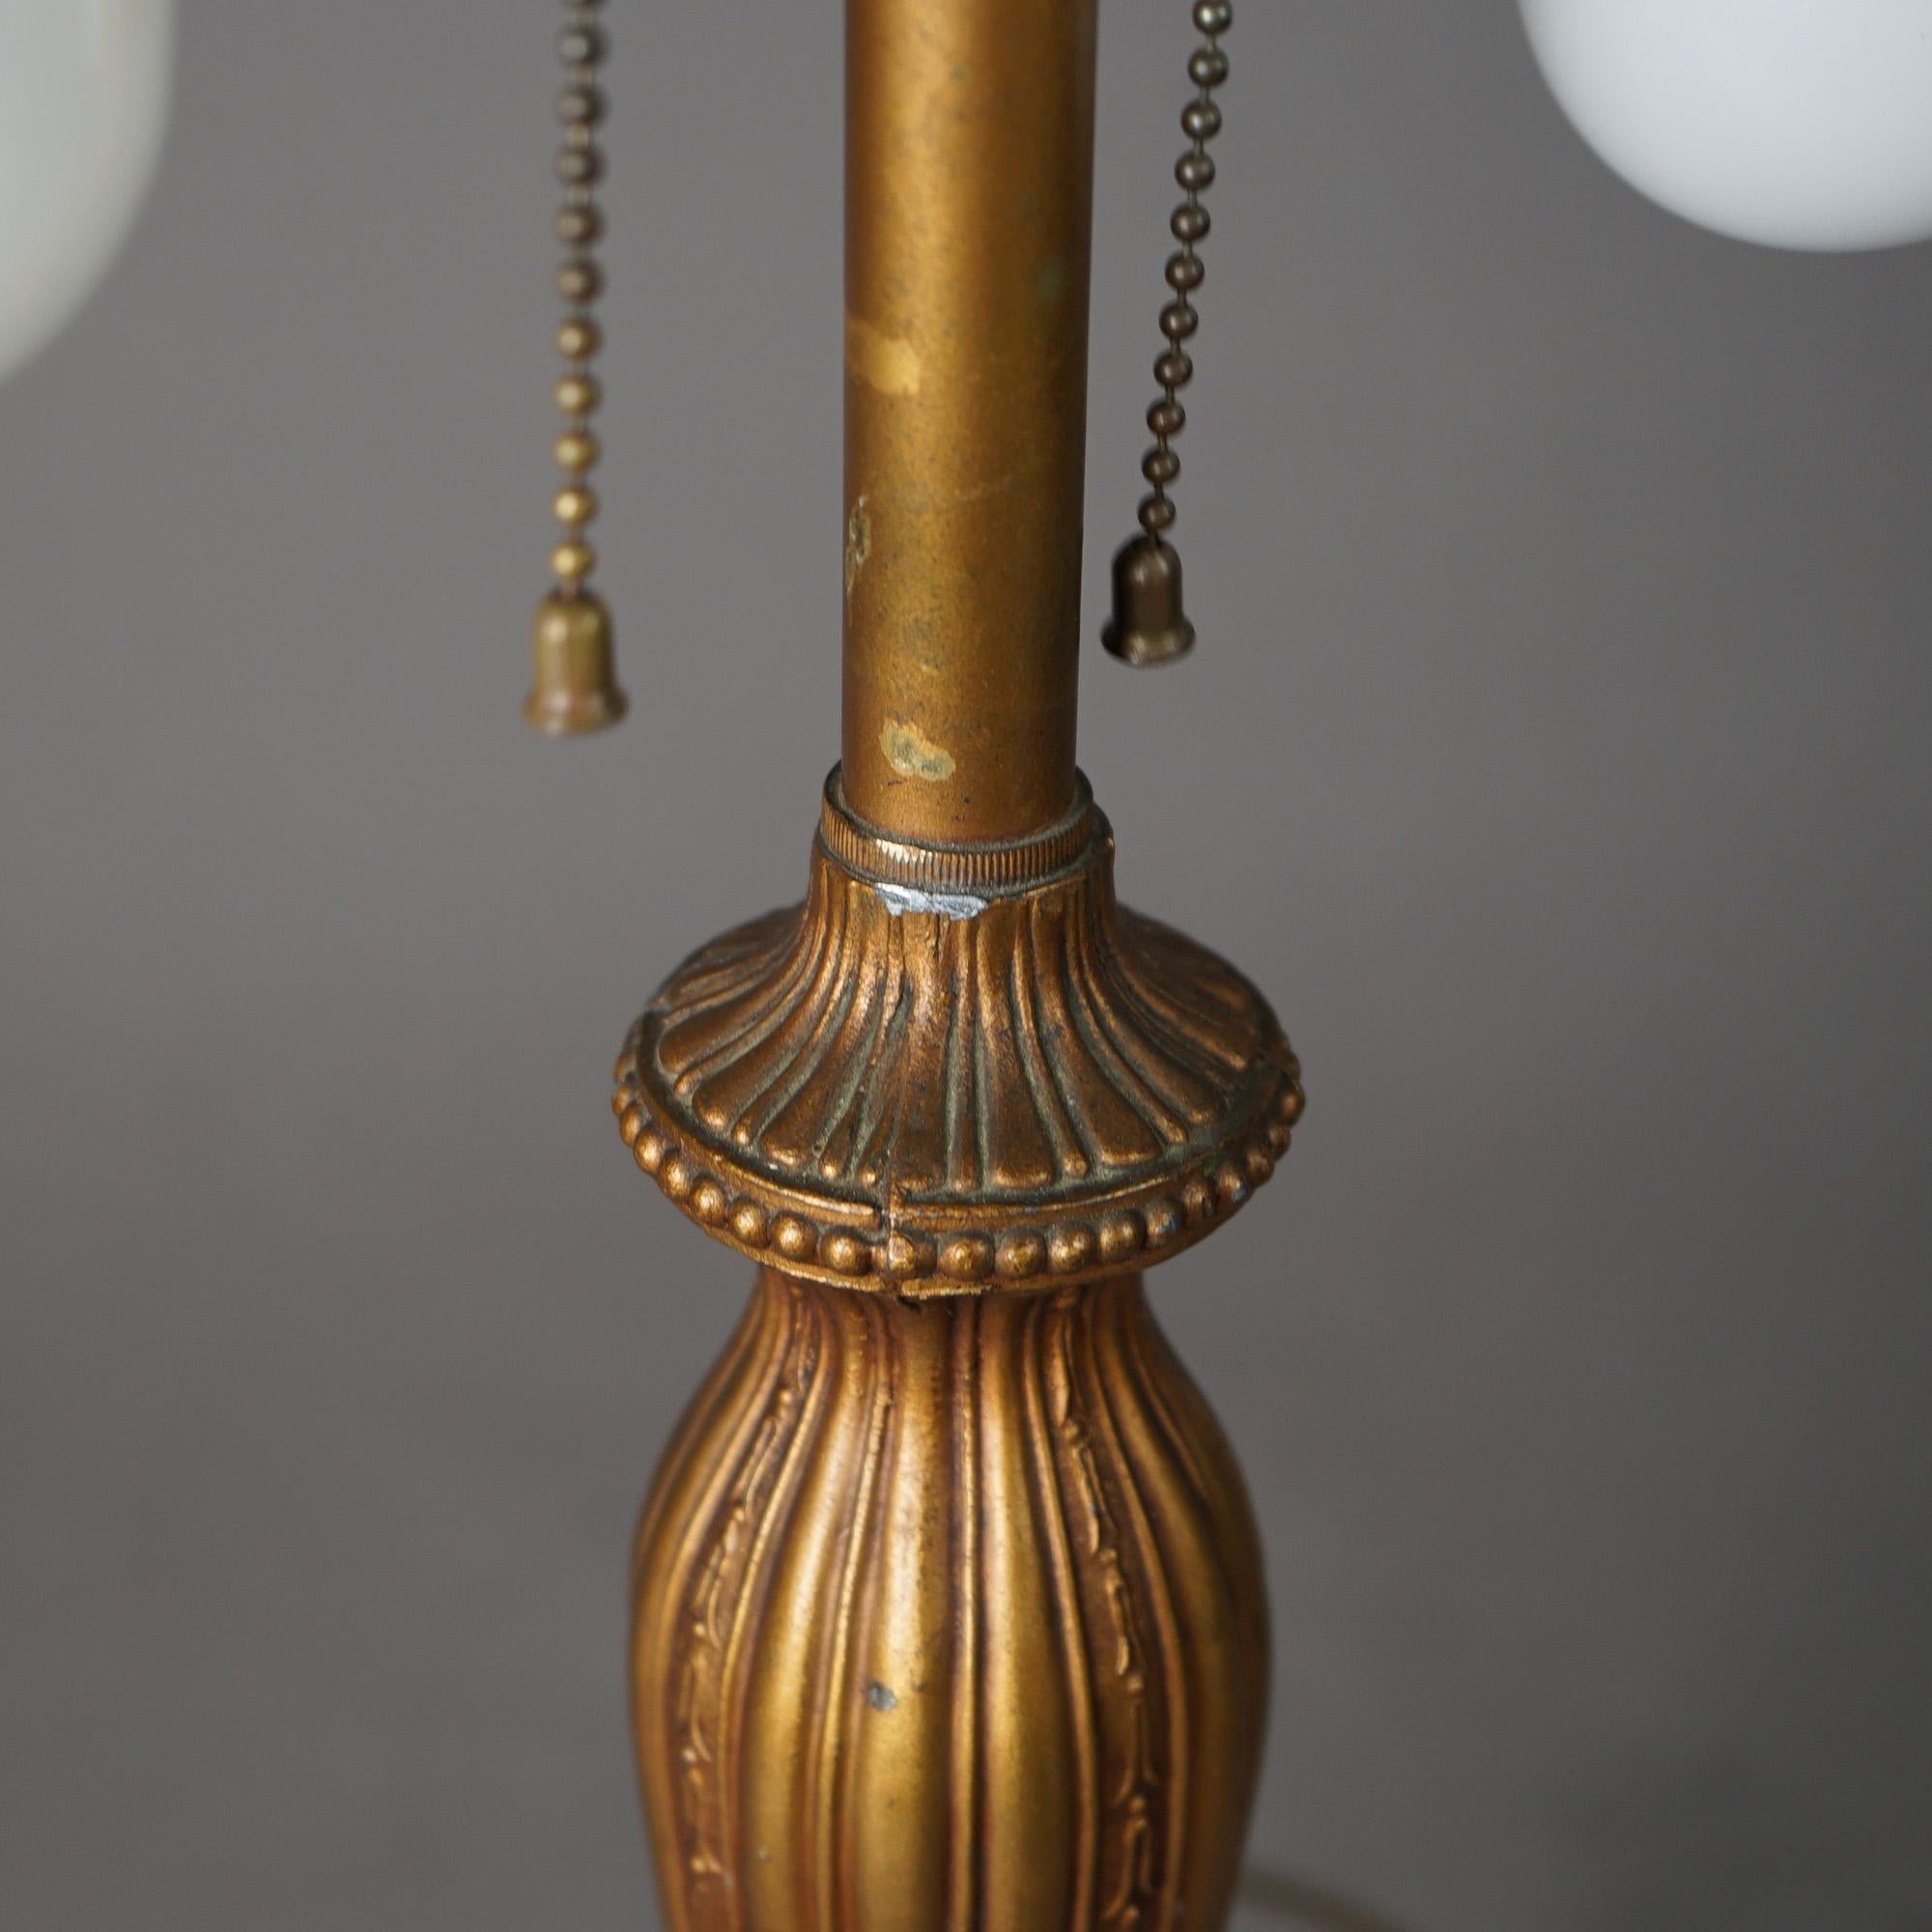 Antique Arts & Crafts Bradley & Hubbard School Slag Glass Table Lamp c1920 For Sale 6